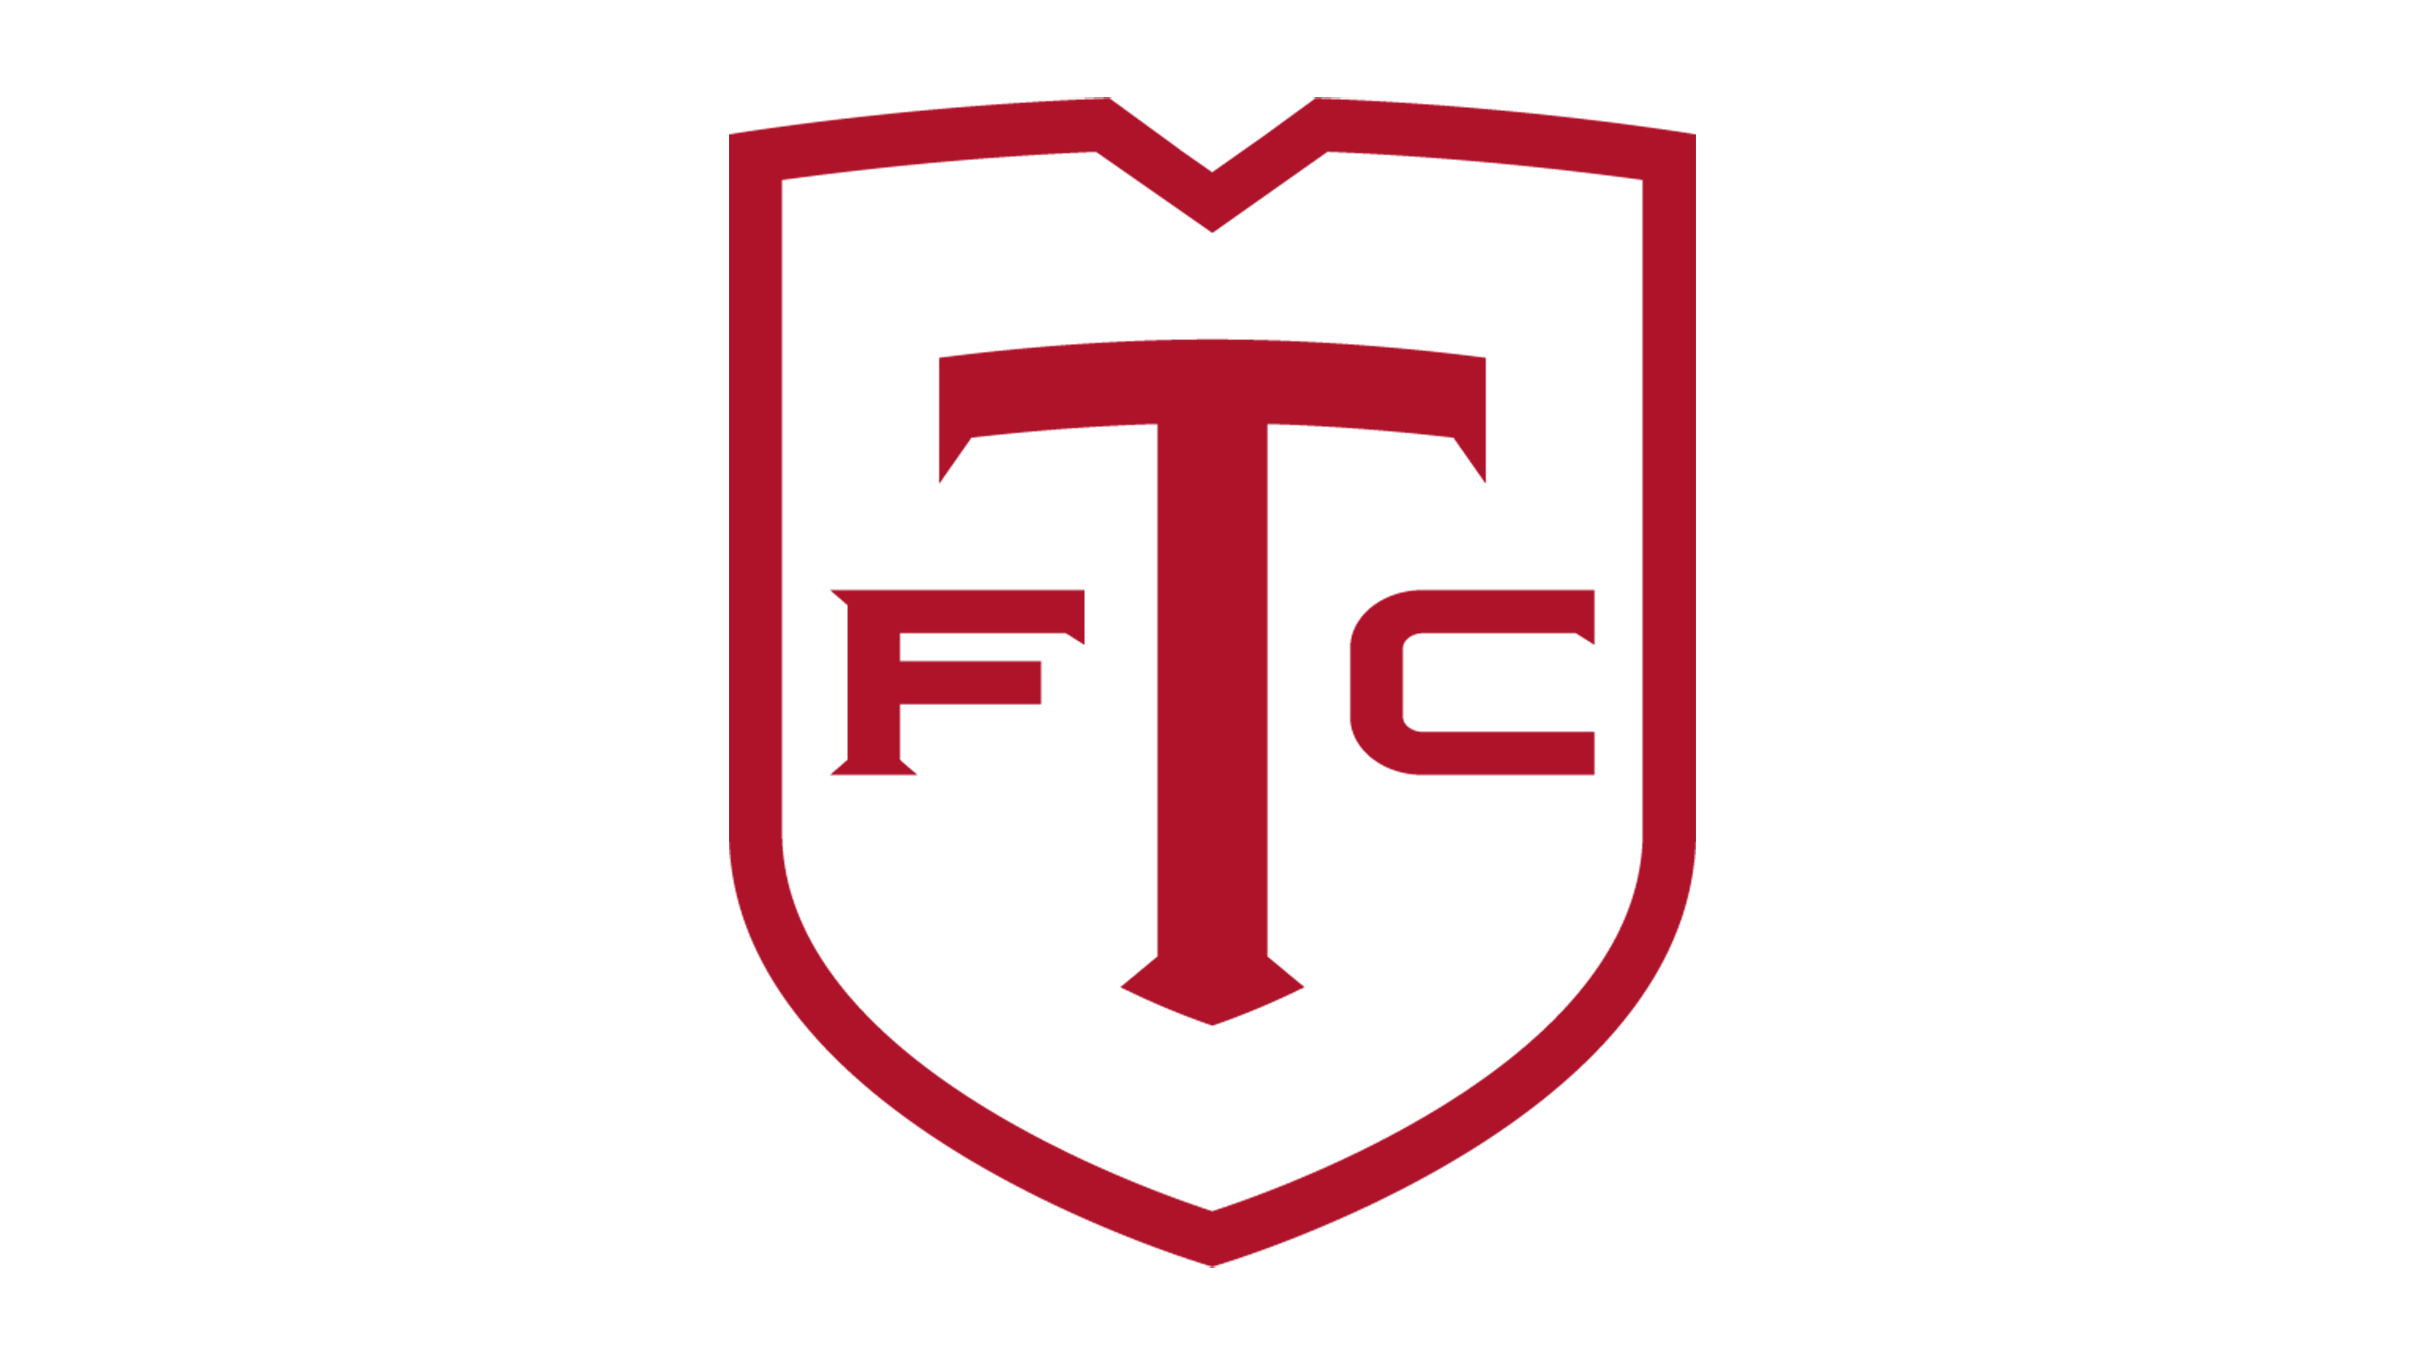 Toronto FC vs New York City Football Club